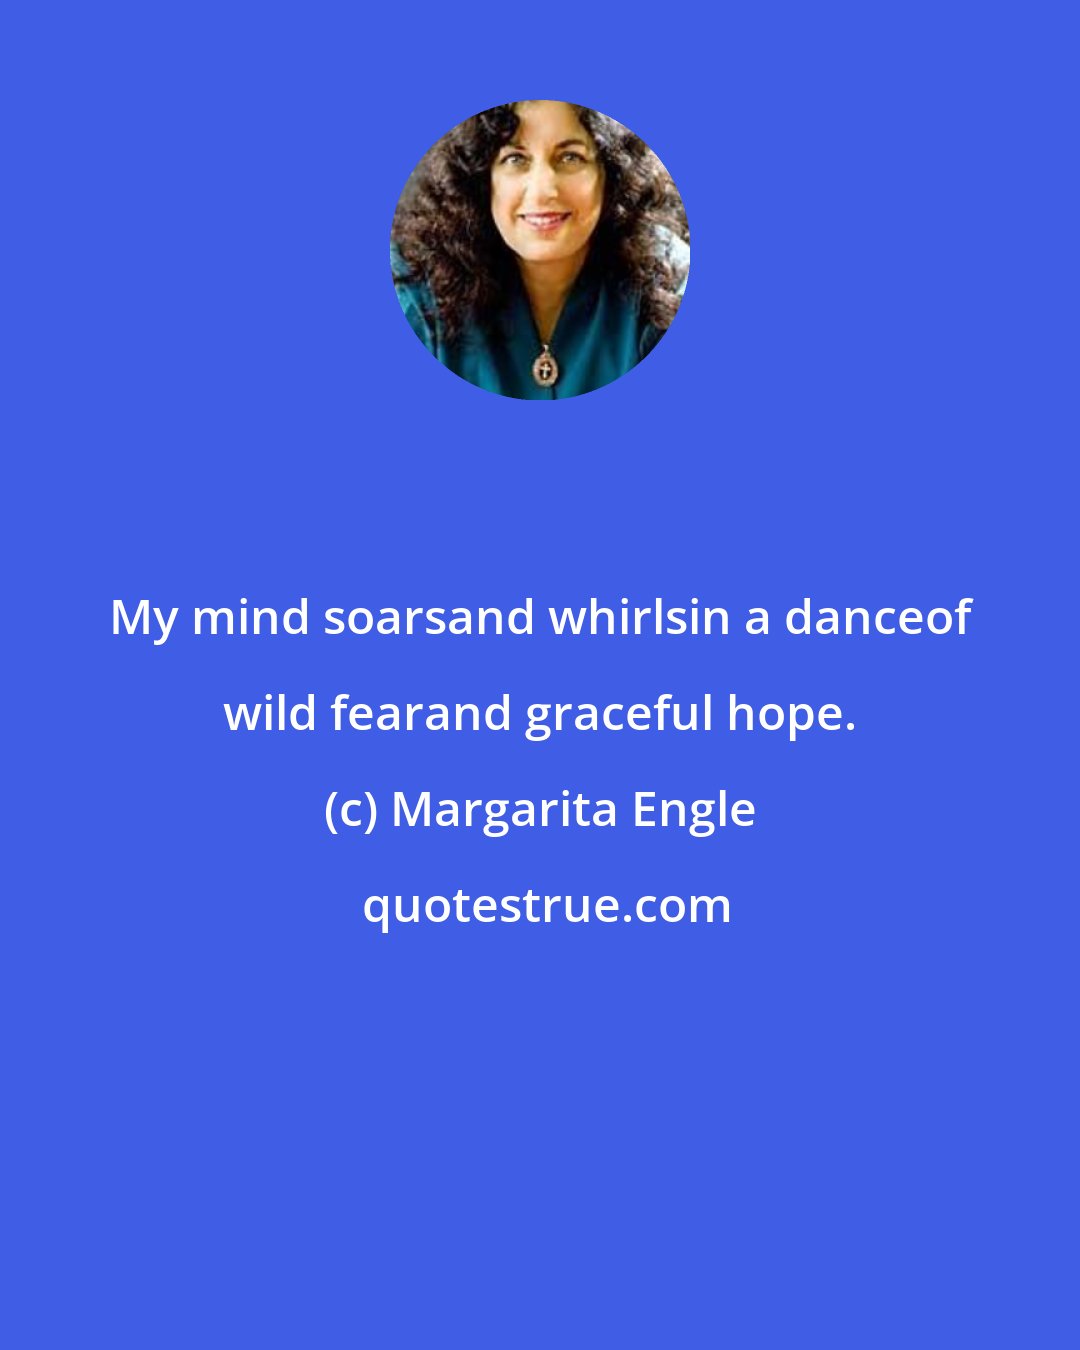 Margarita Engle: My mind soarsand whirlsin a danceof wild fearand graceful hope.